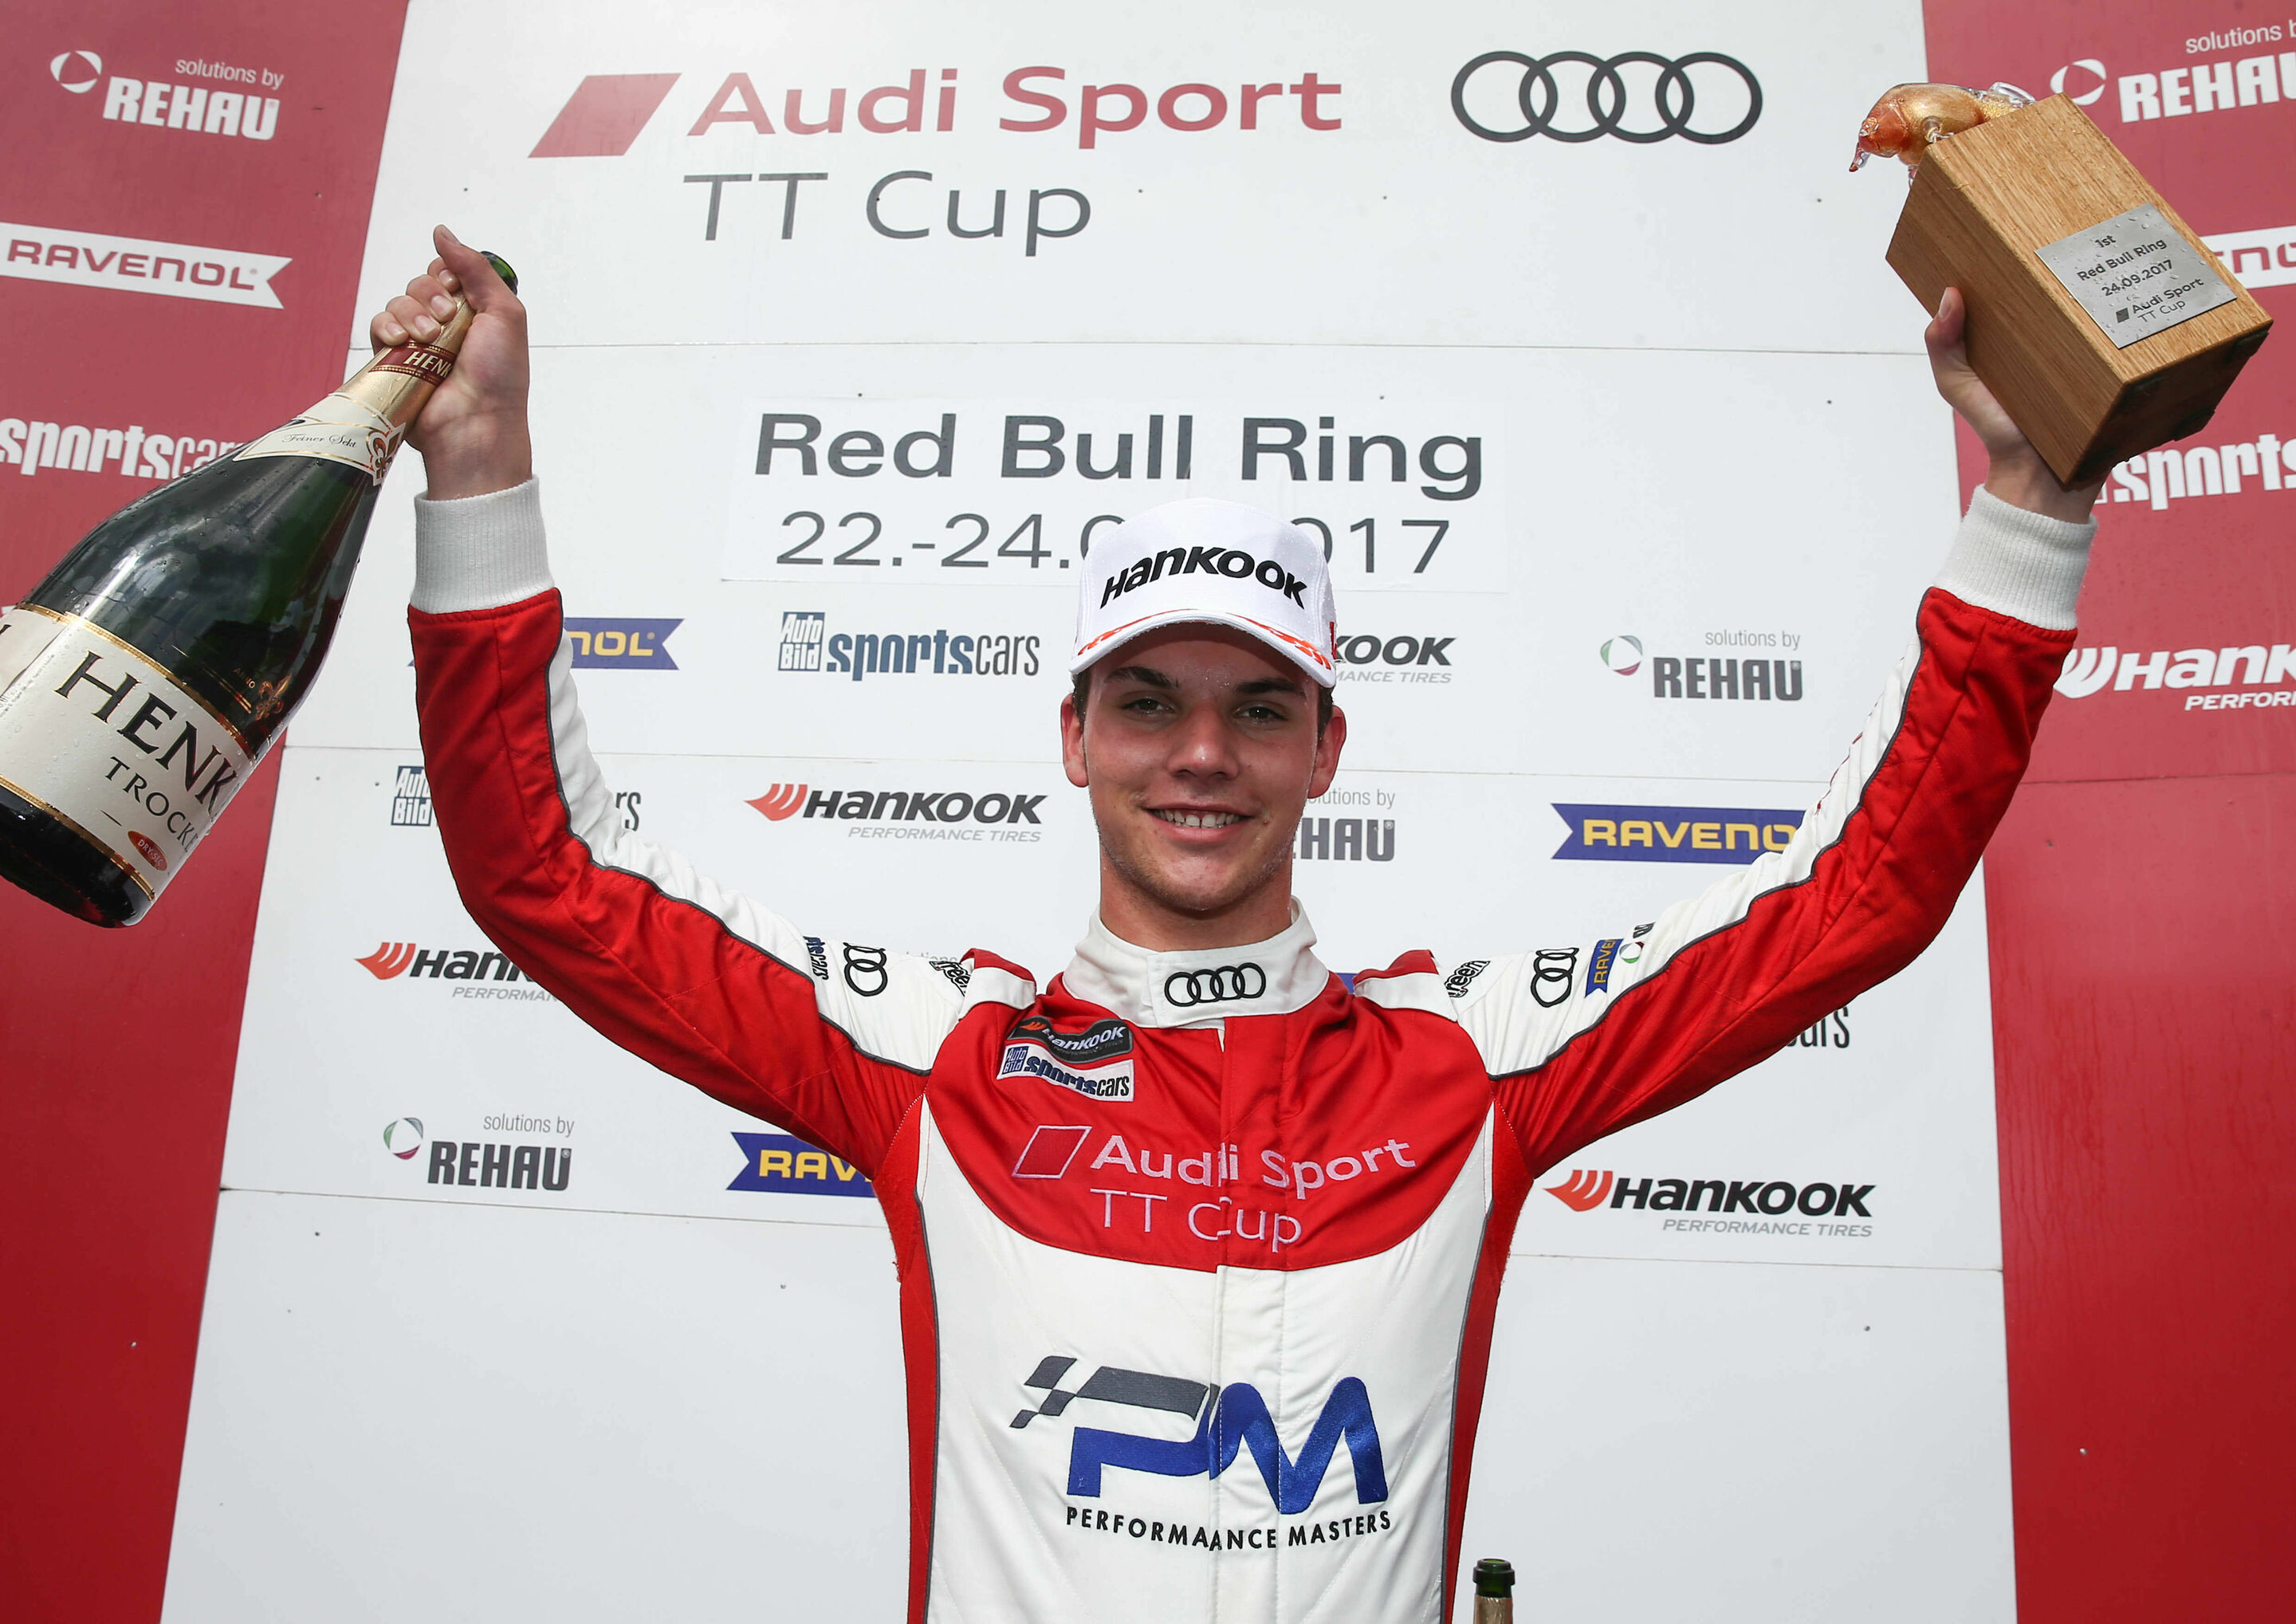 Audi Sport TT Cup Red Bull Ring 2017